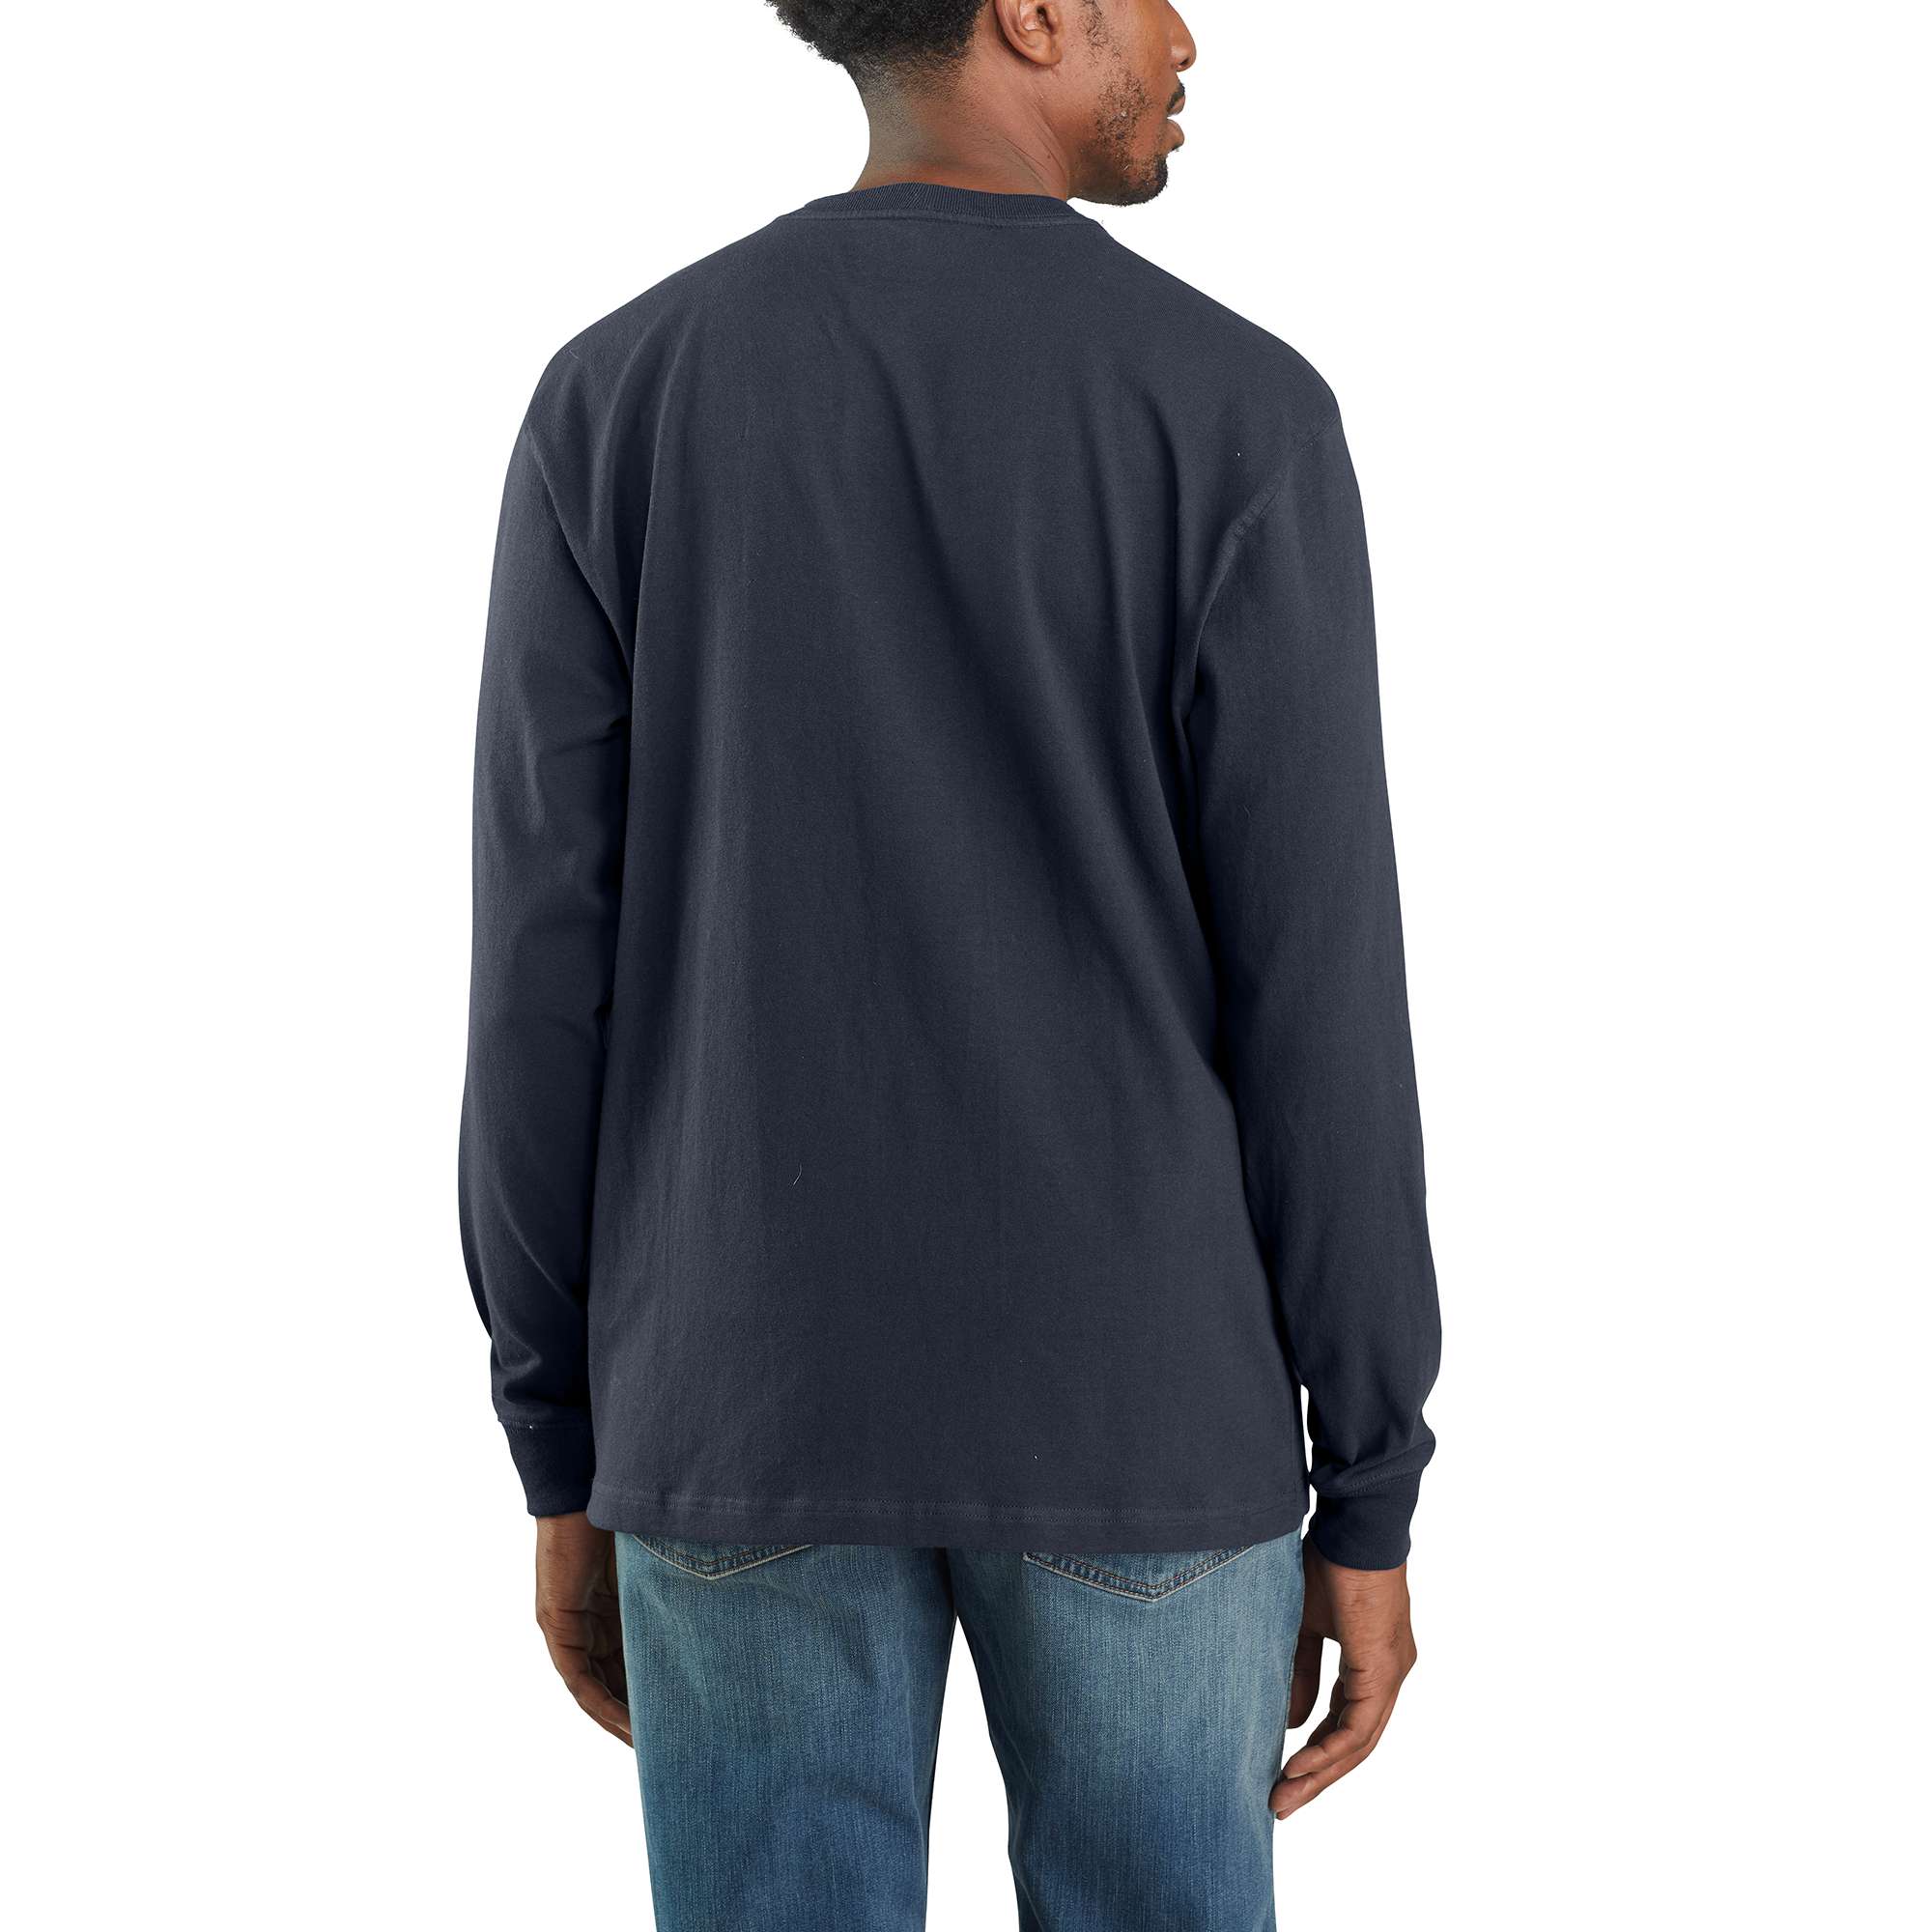 Carhartt Men's Knit Long Sleeve Solid Sweatshirt (3Xl Tall) in the